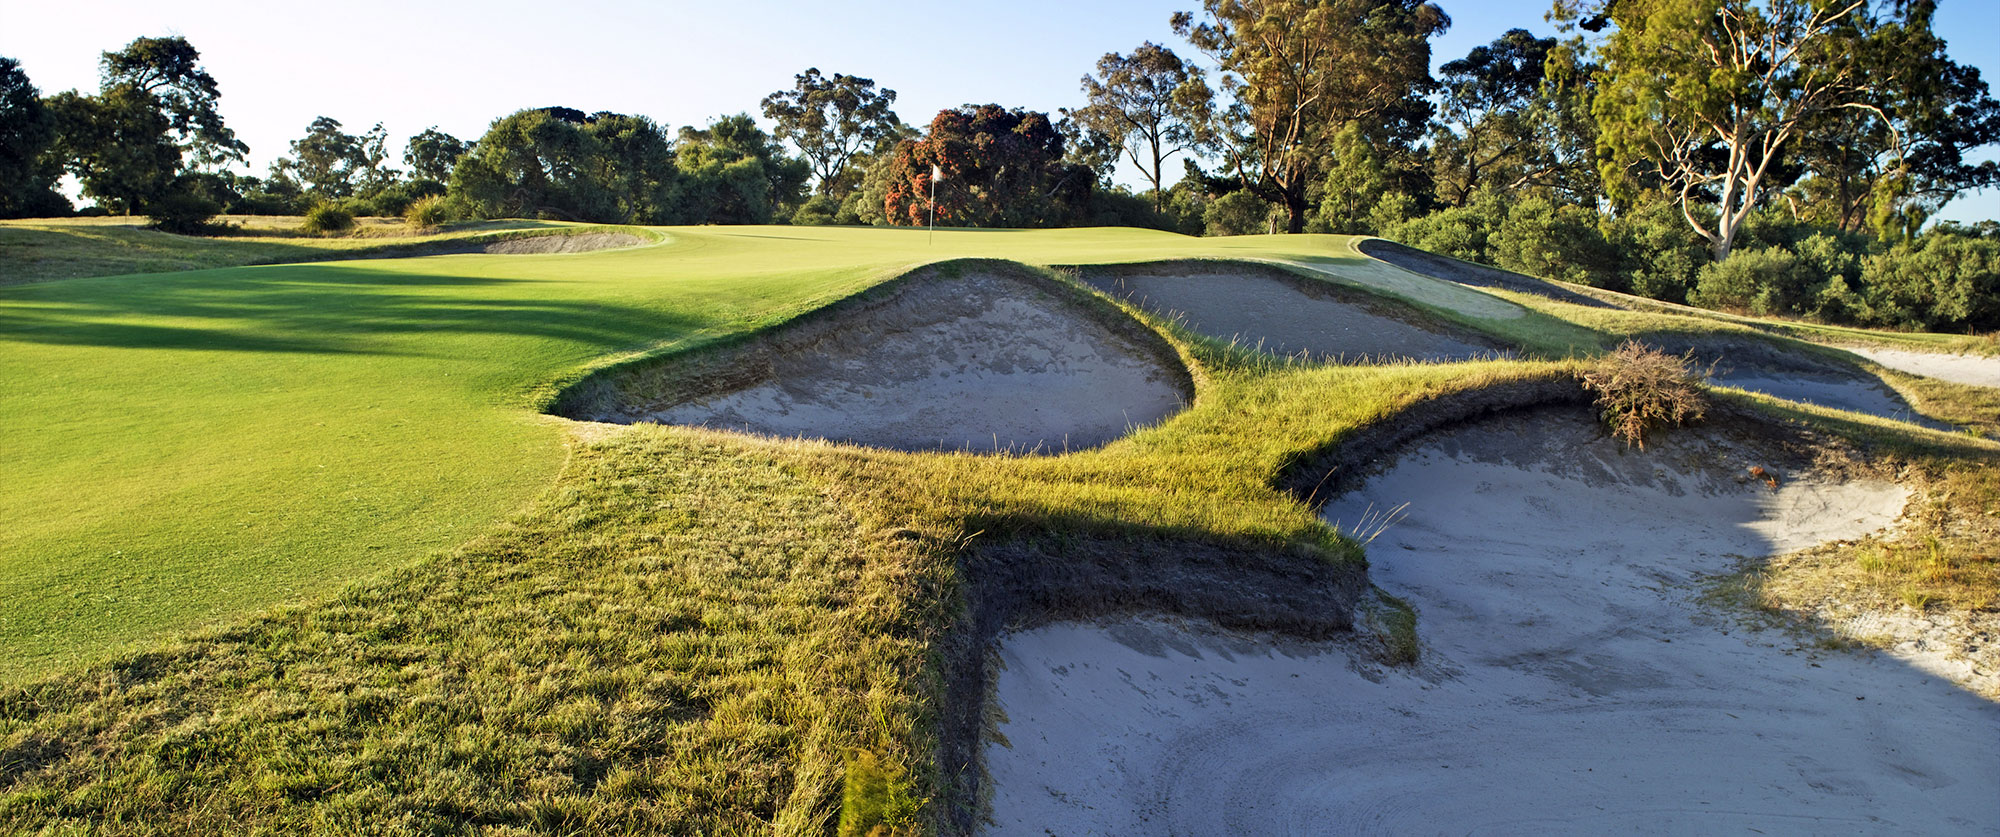 Australia Golf Vacations: Best Australian Golf Courses - Kingston Heath Melbourne